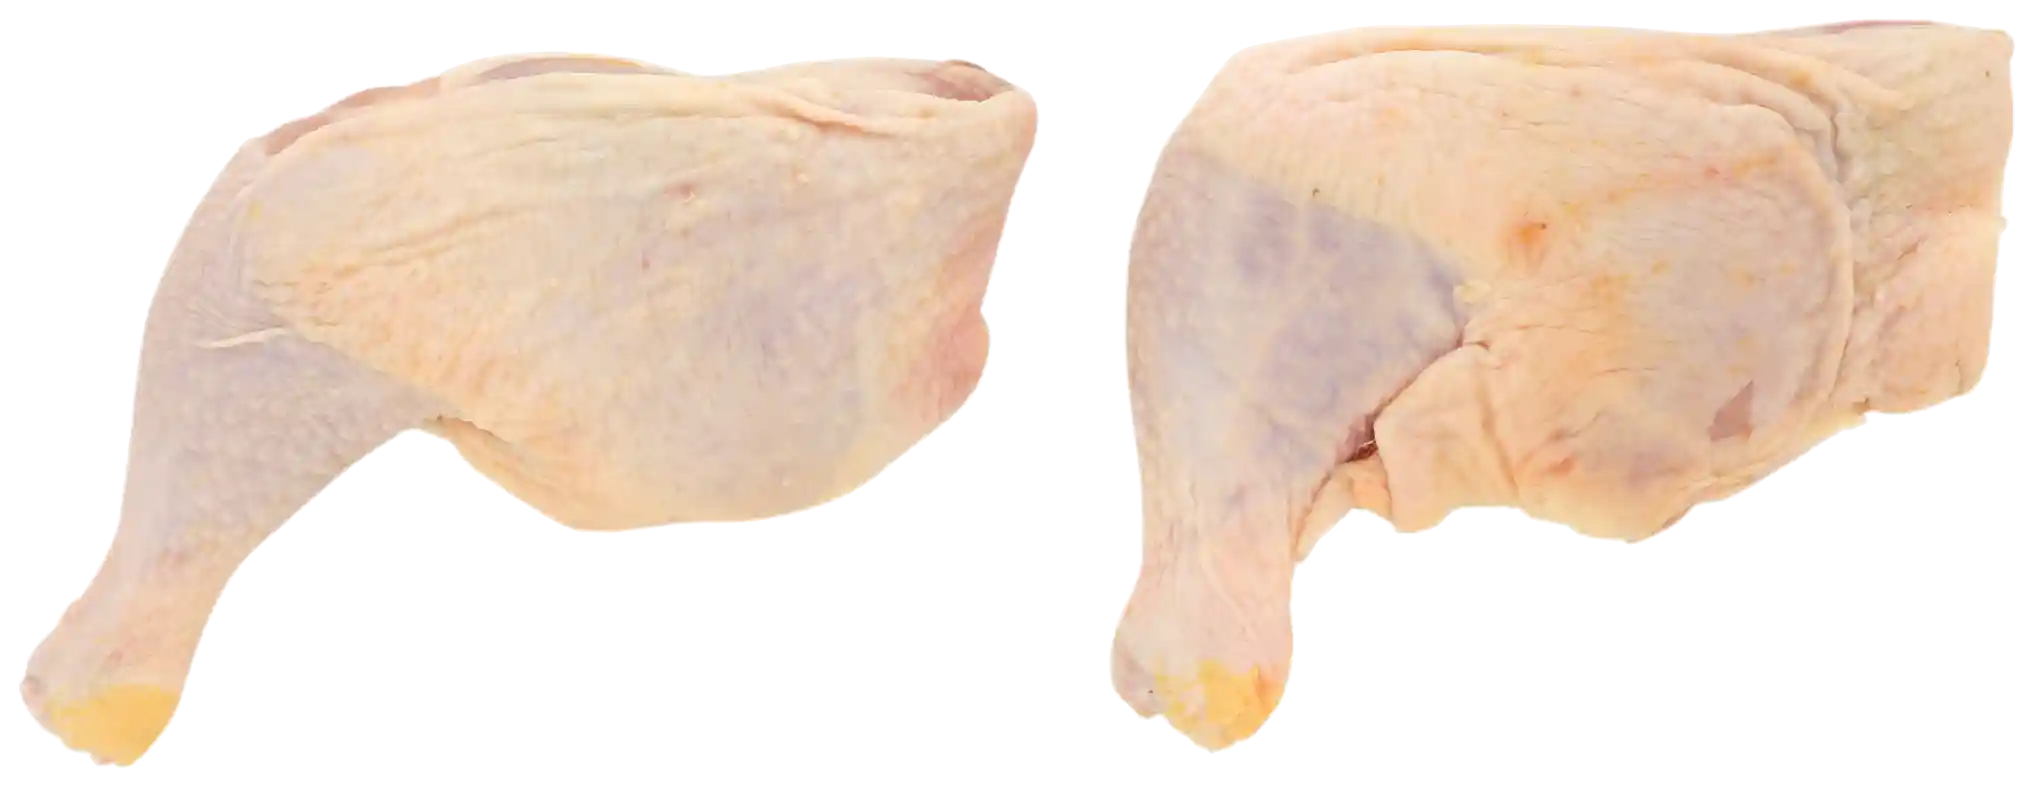 Tyson Pride® Uncooked Chicken Quarters, Breasts & Legs_image_01